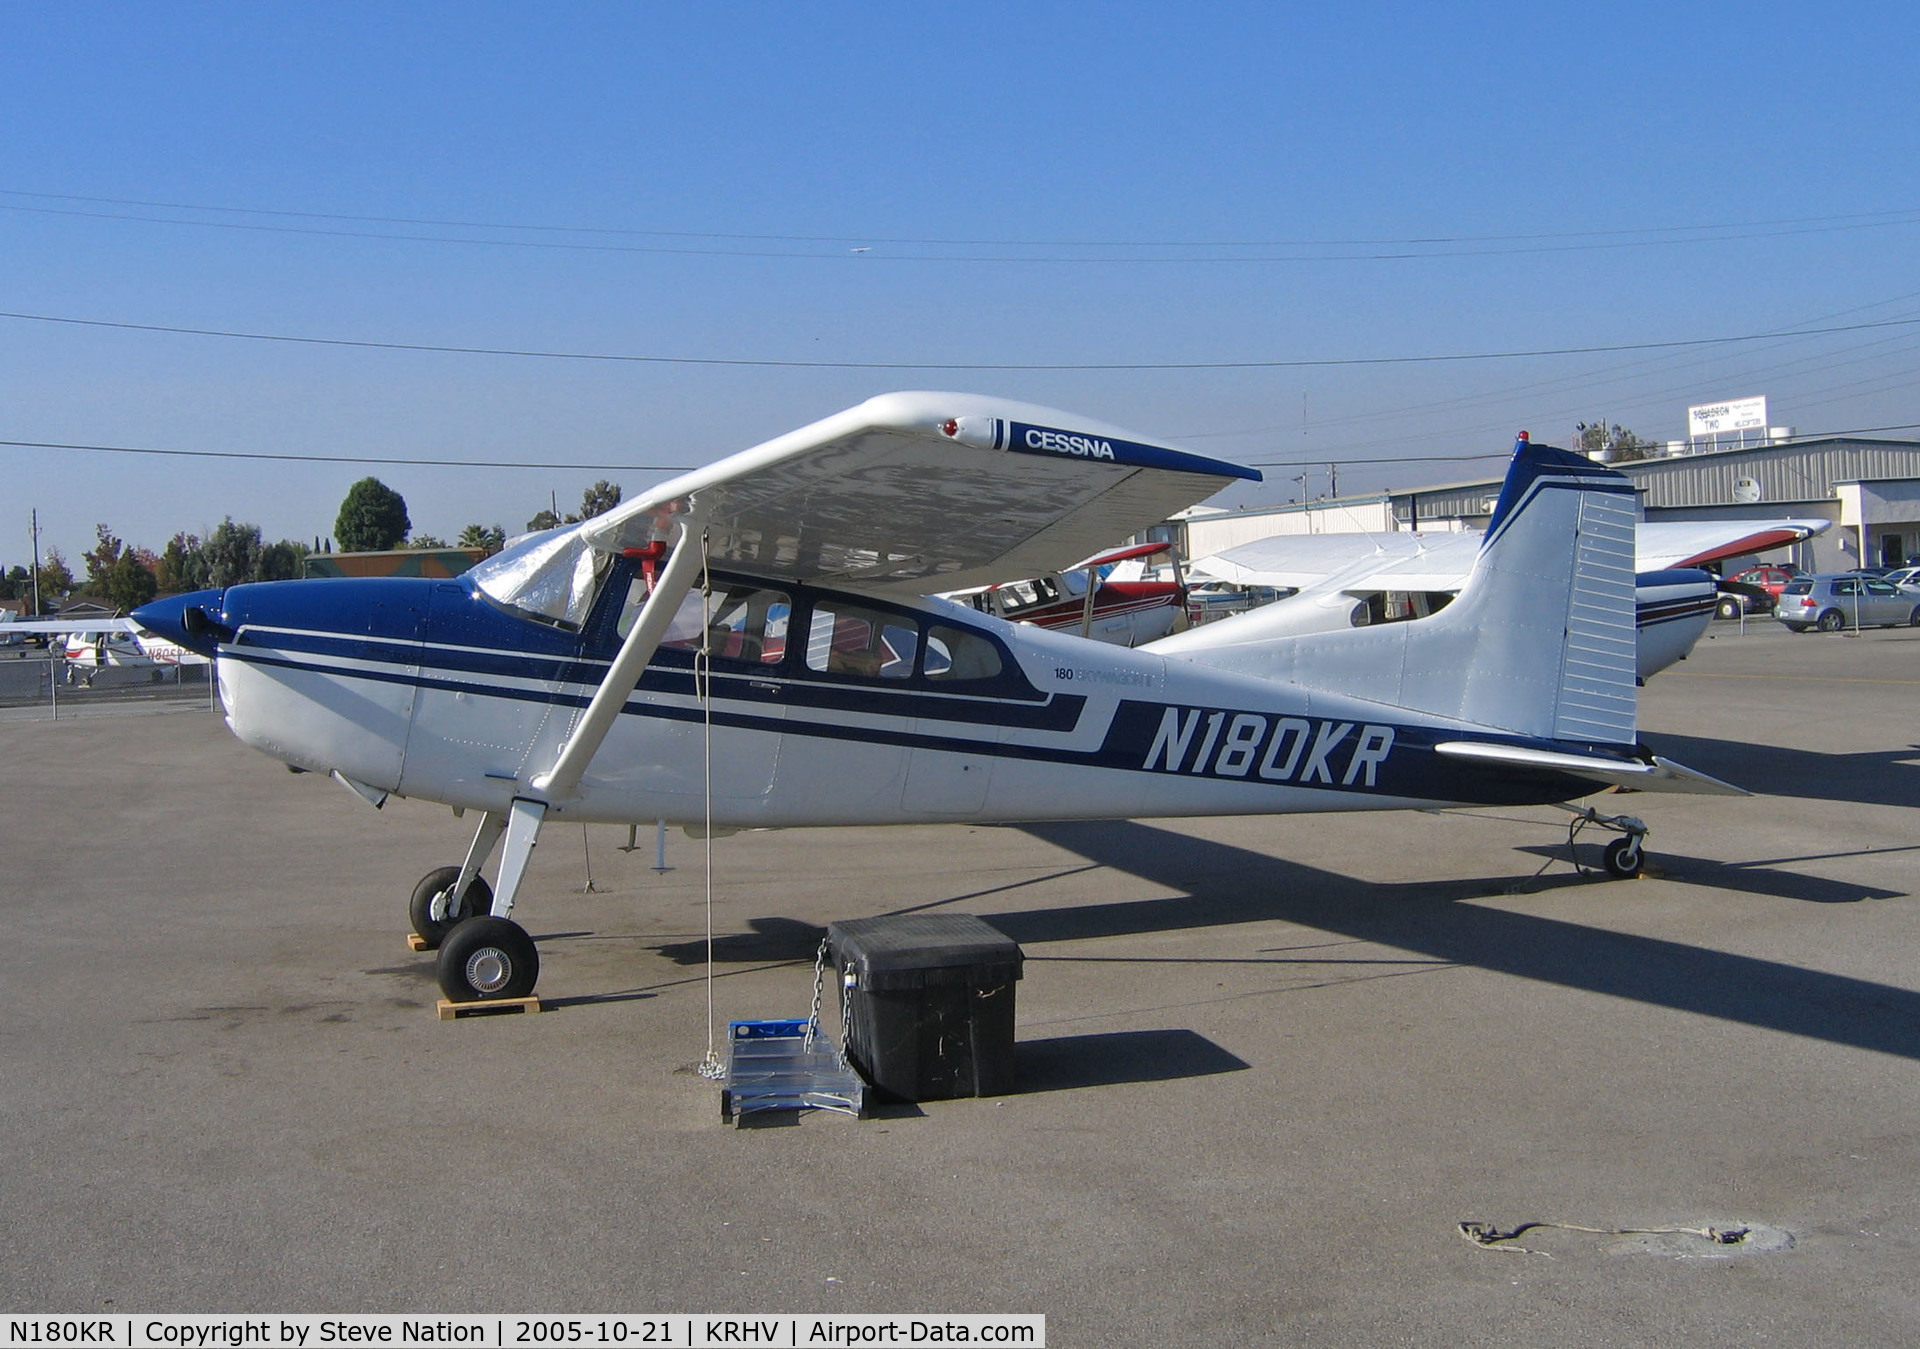 N180KR, 1980 Cessna 180K Skywagon C/N 18053147, Locally-based 1980 Cessna 180K in gorgeous late PM sunlight @ Reid-Hillview Airport, San Jose, CA